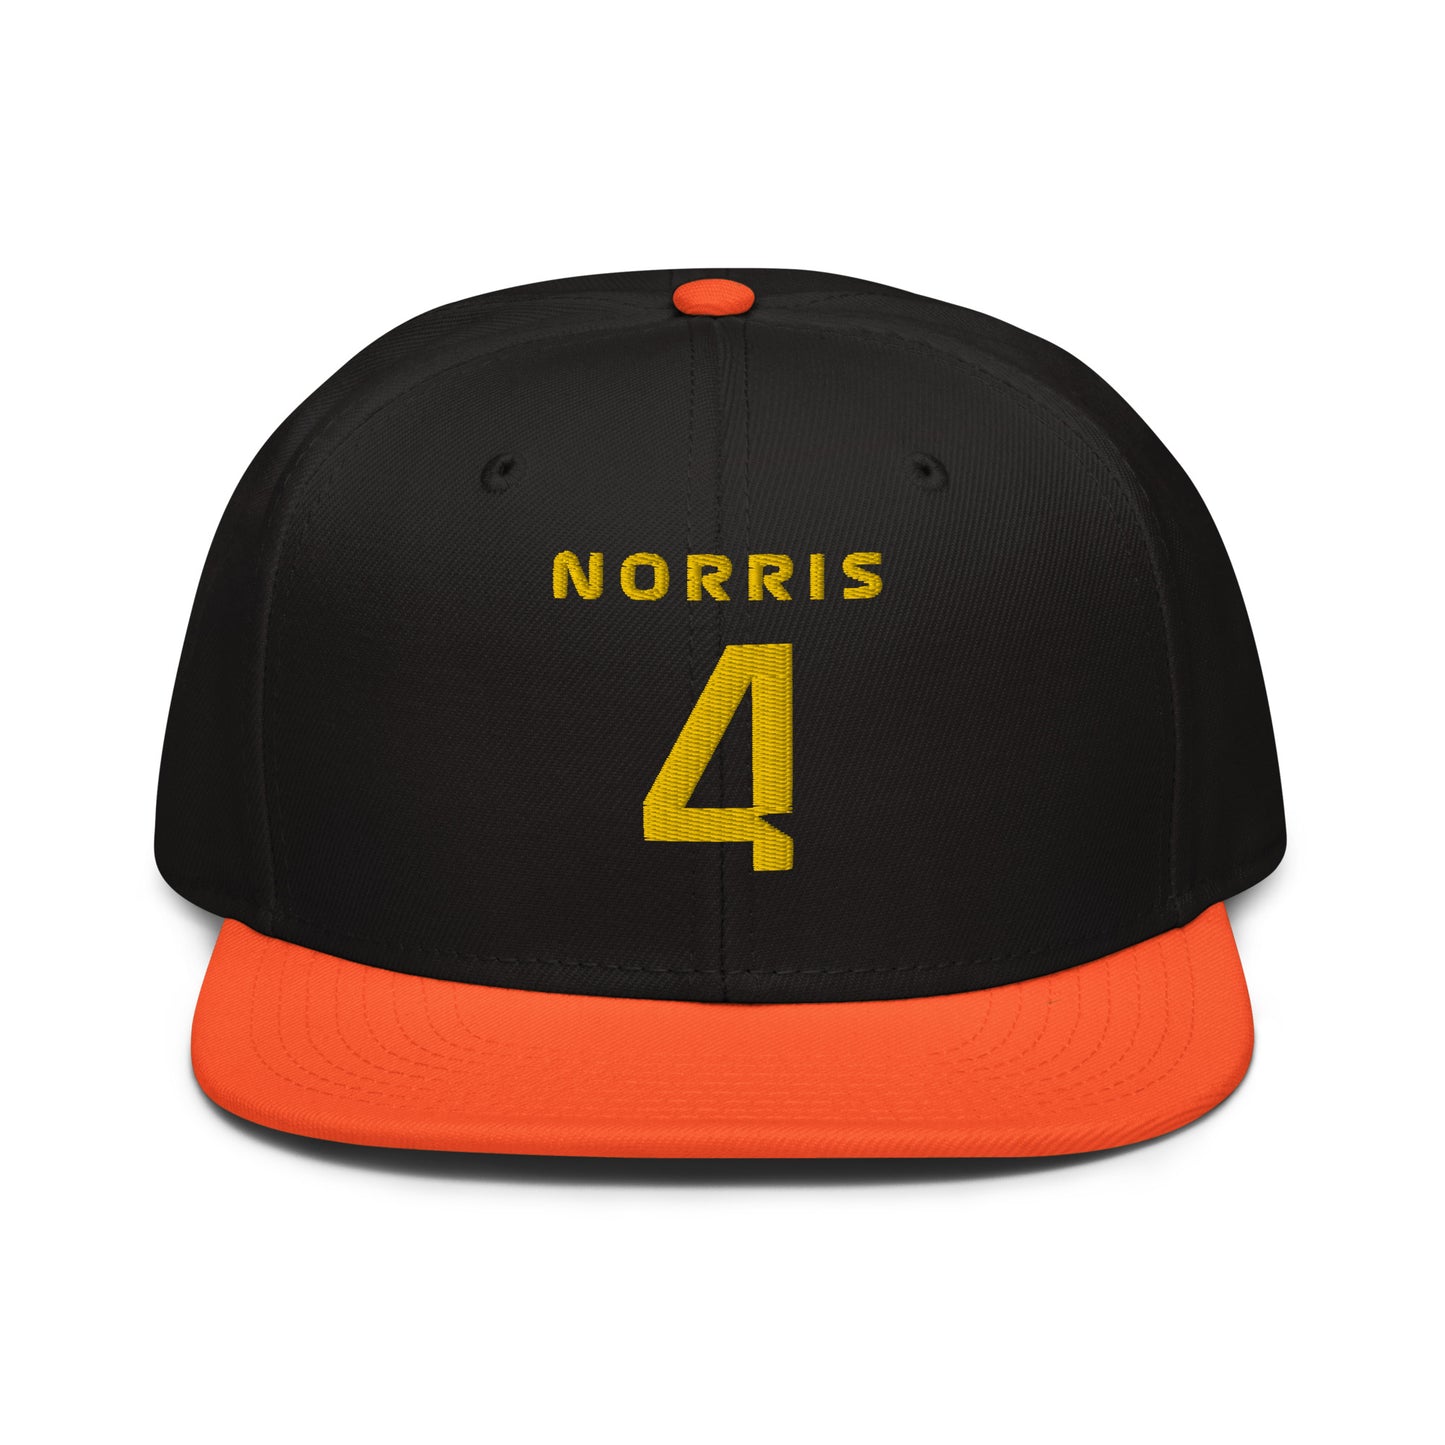 lando norris 4 snapback hat black and gold